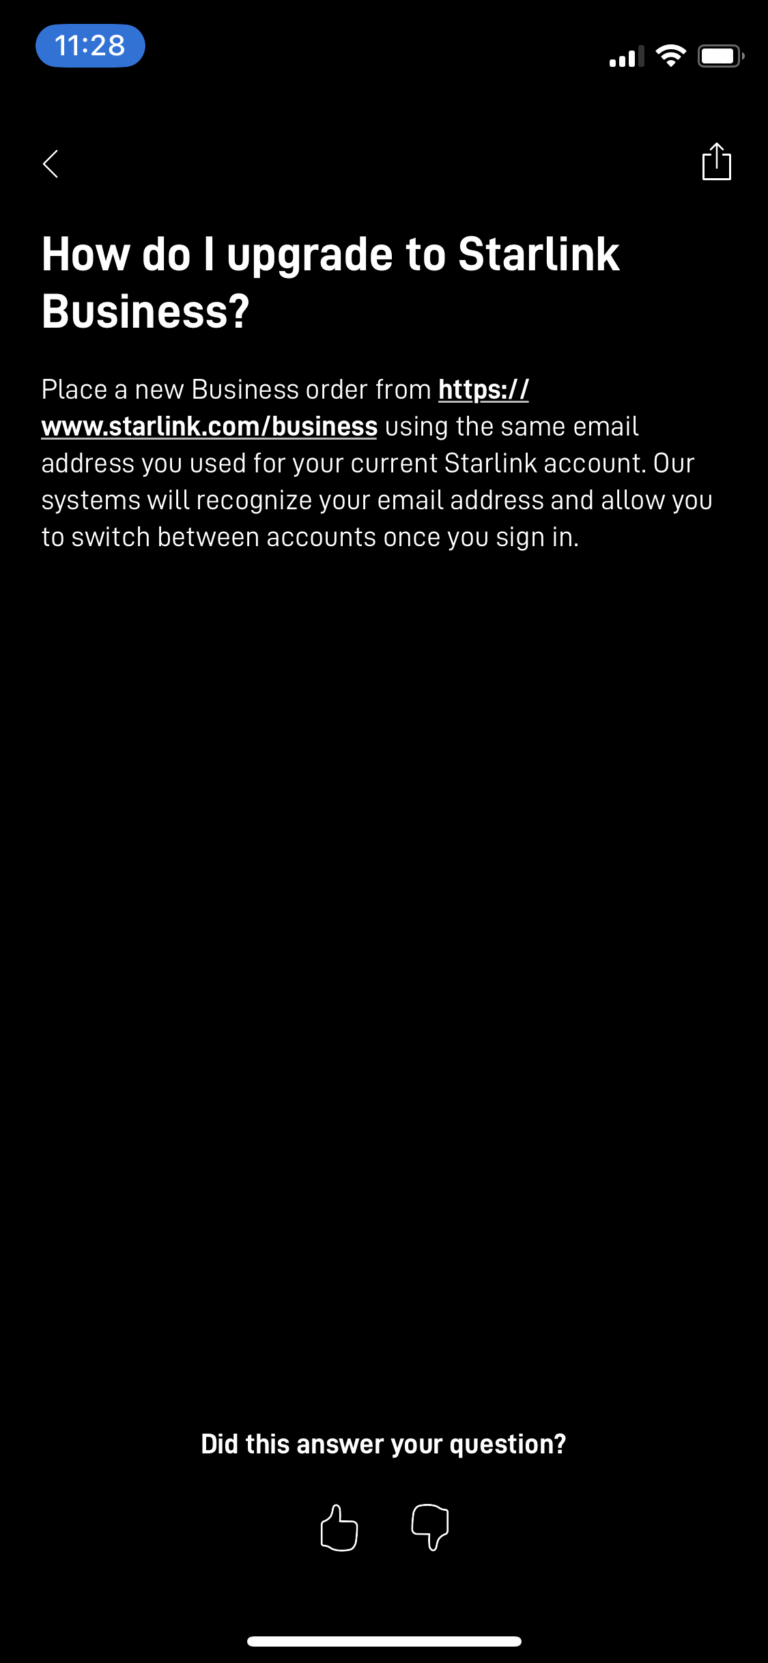 screenshot of Starlink's app support center on upgrading to Roam